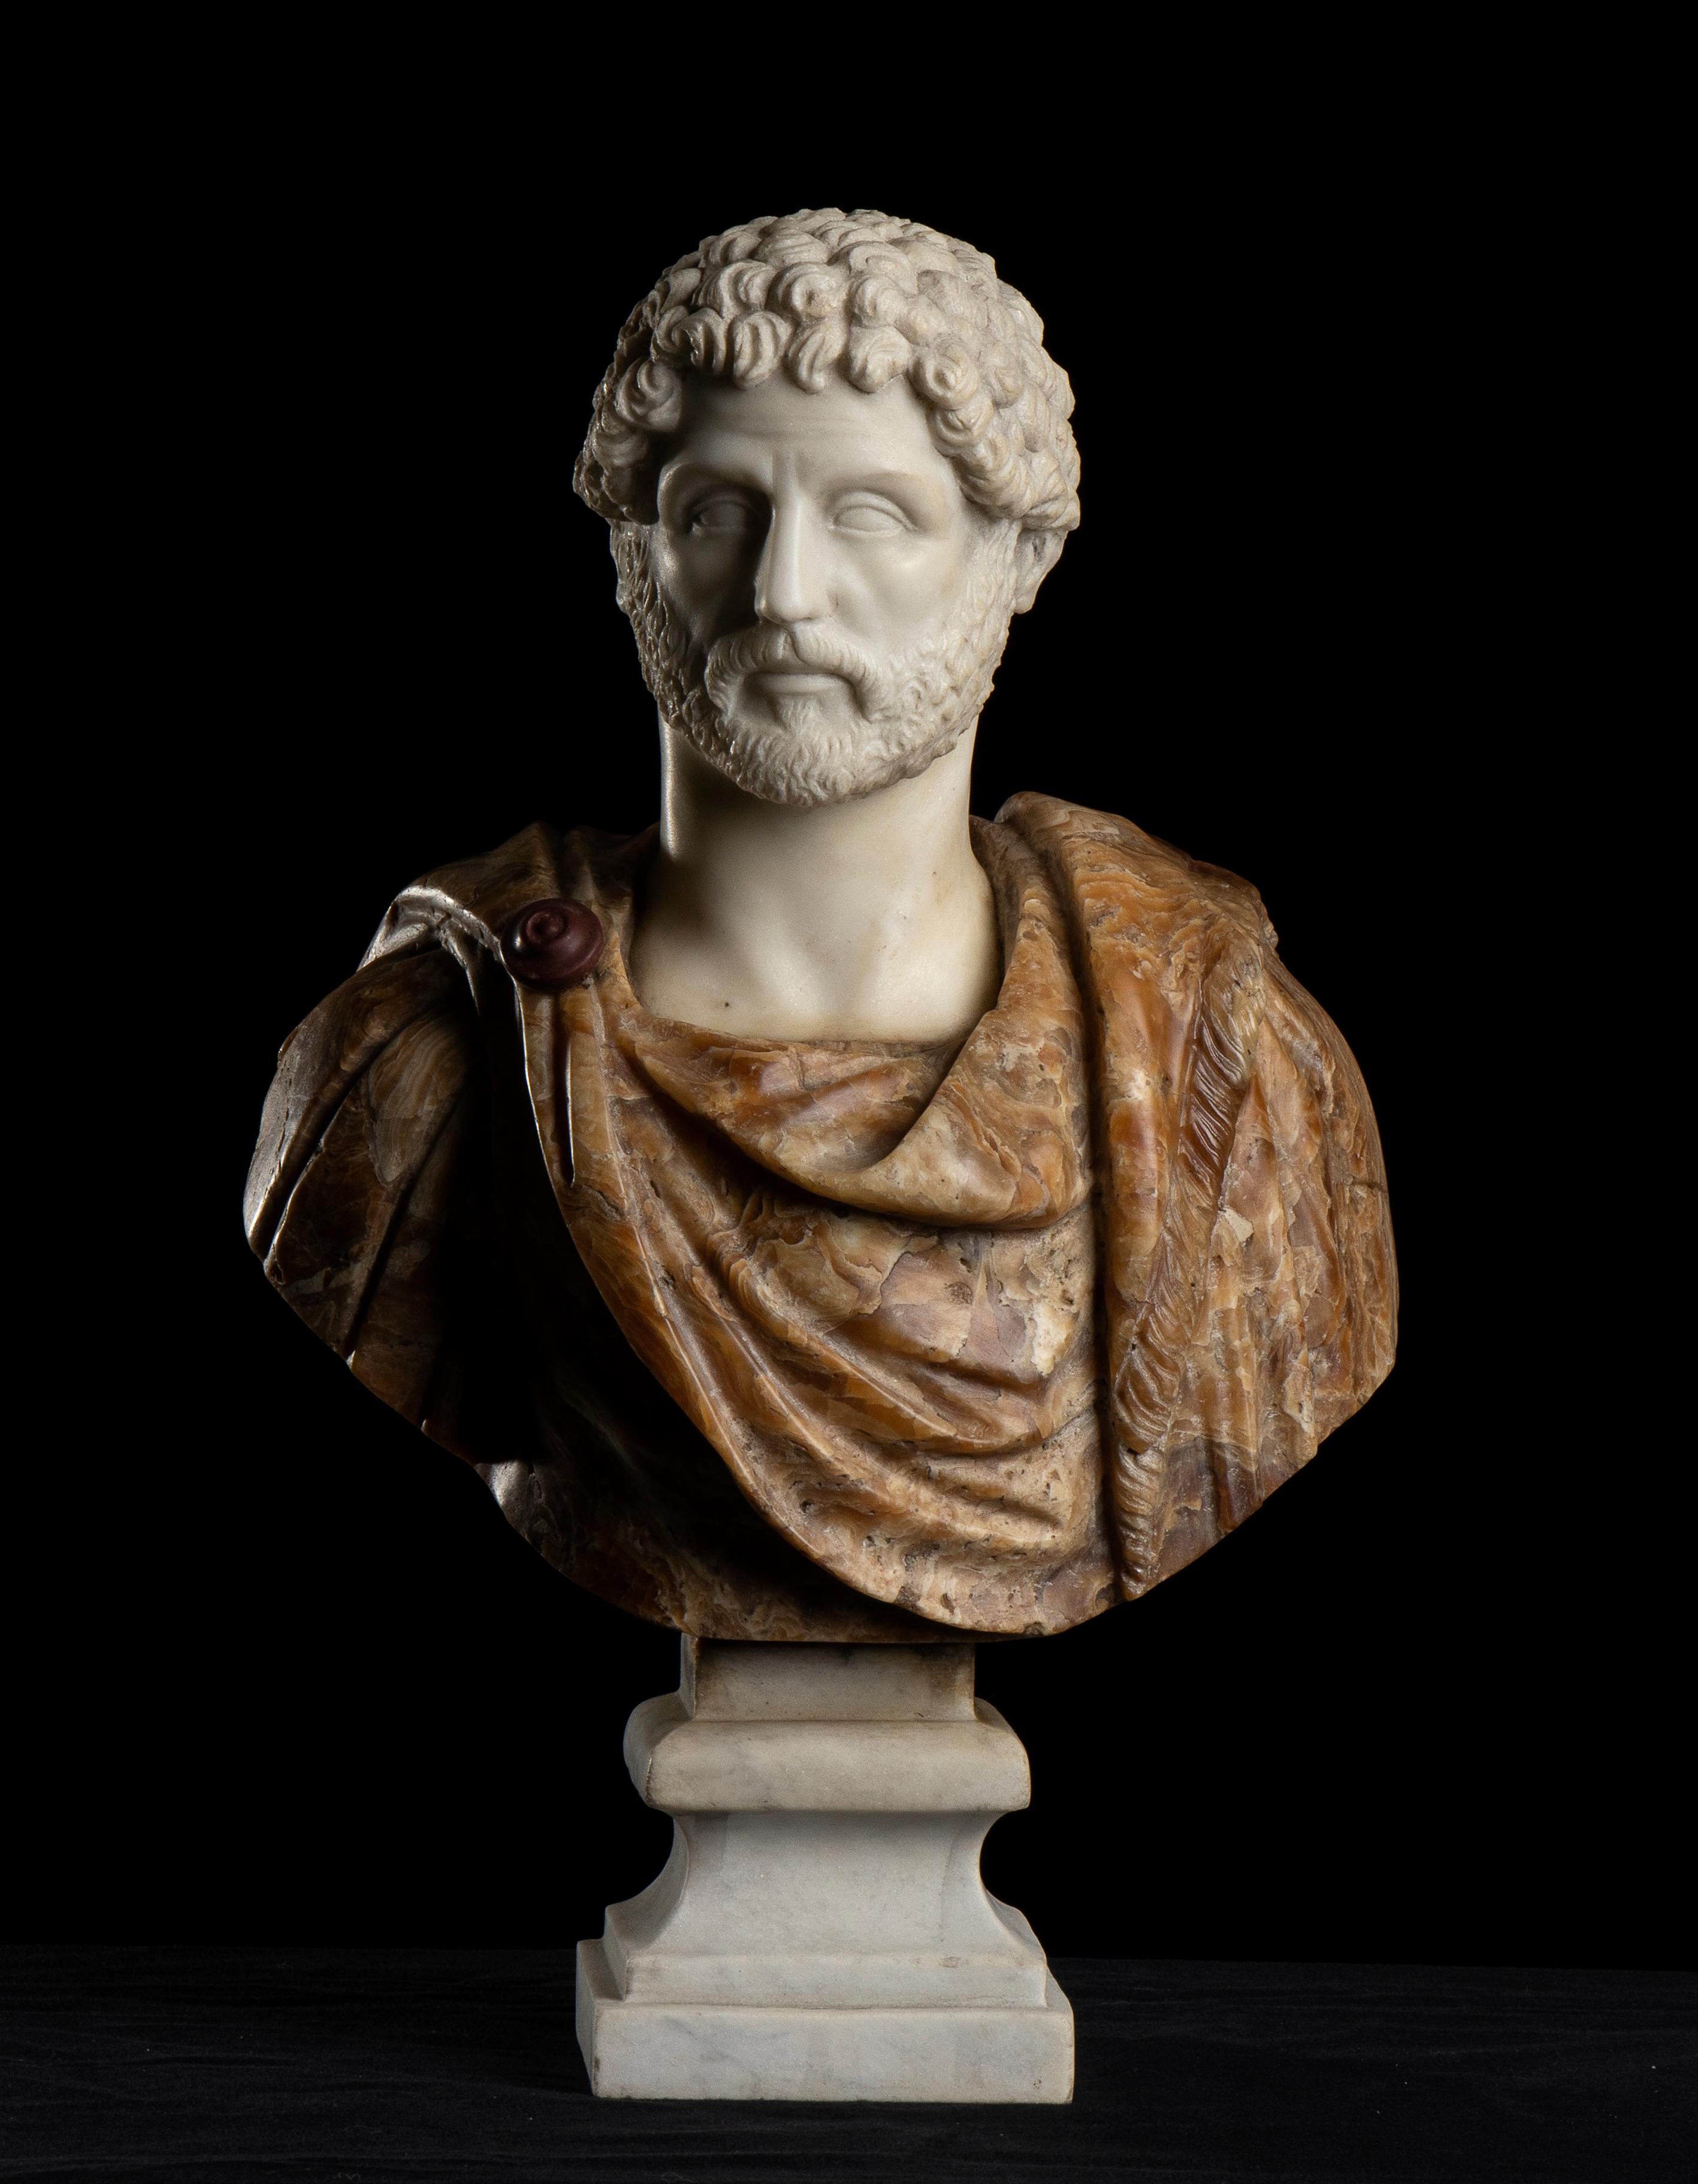 Unknown Figurative Sculpture - Sculpture Bust Portrait Of Roman Emperor Antoninus Pius Italian Marble Onyx 